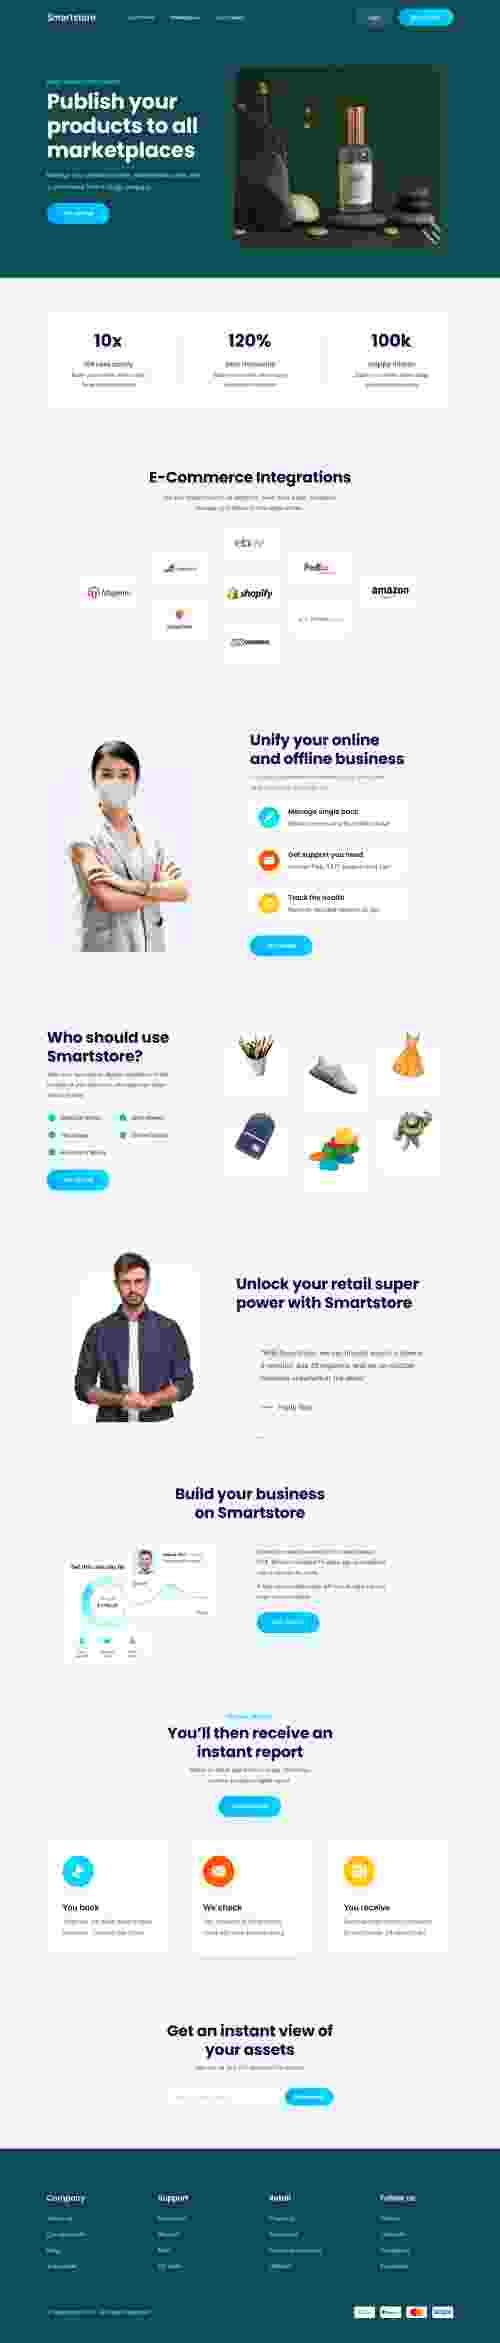 UIHut - Smartstore Retail Store Landing Page - 12100